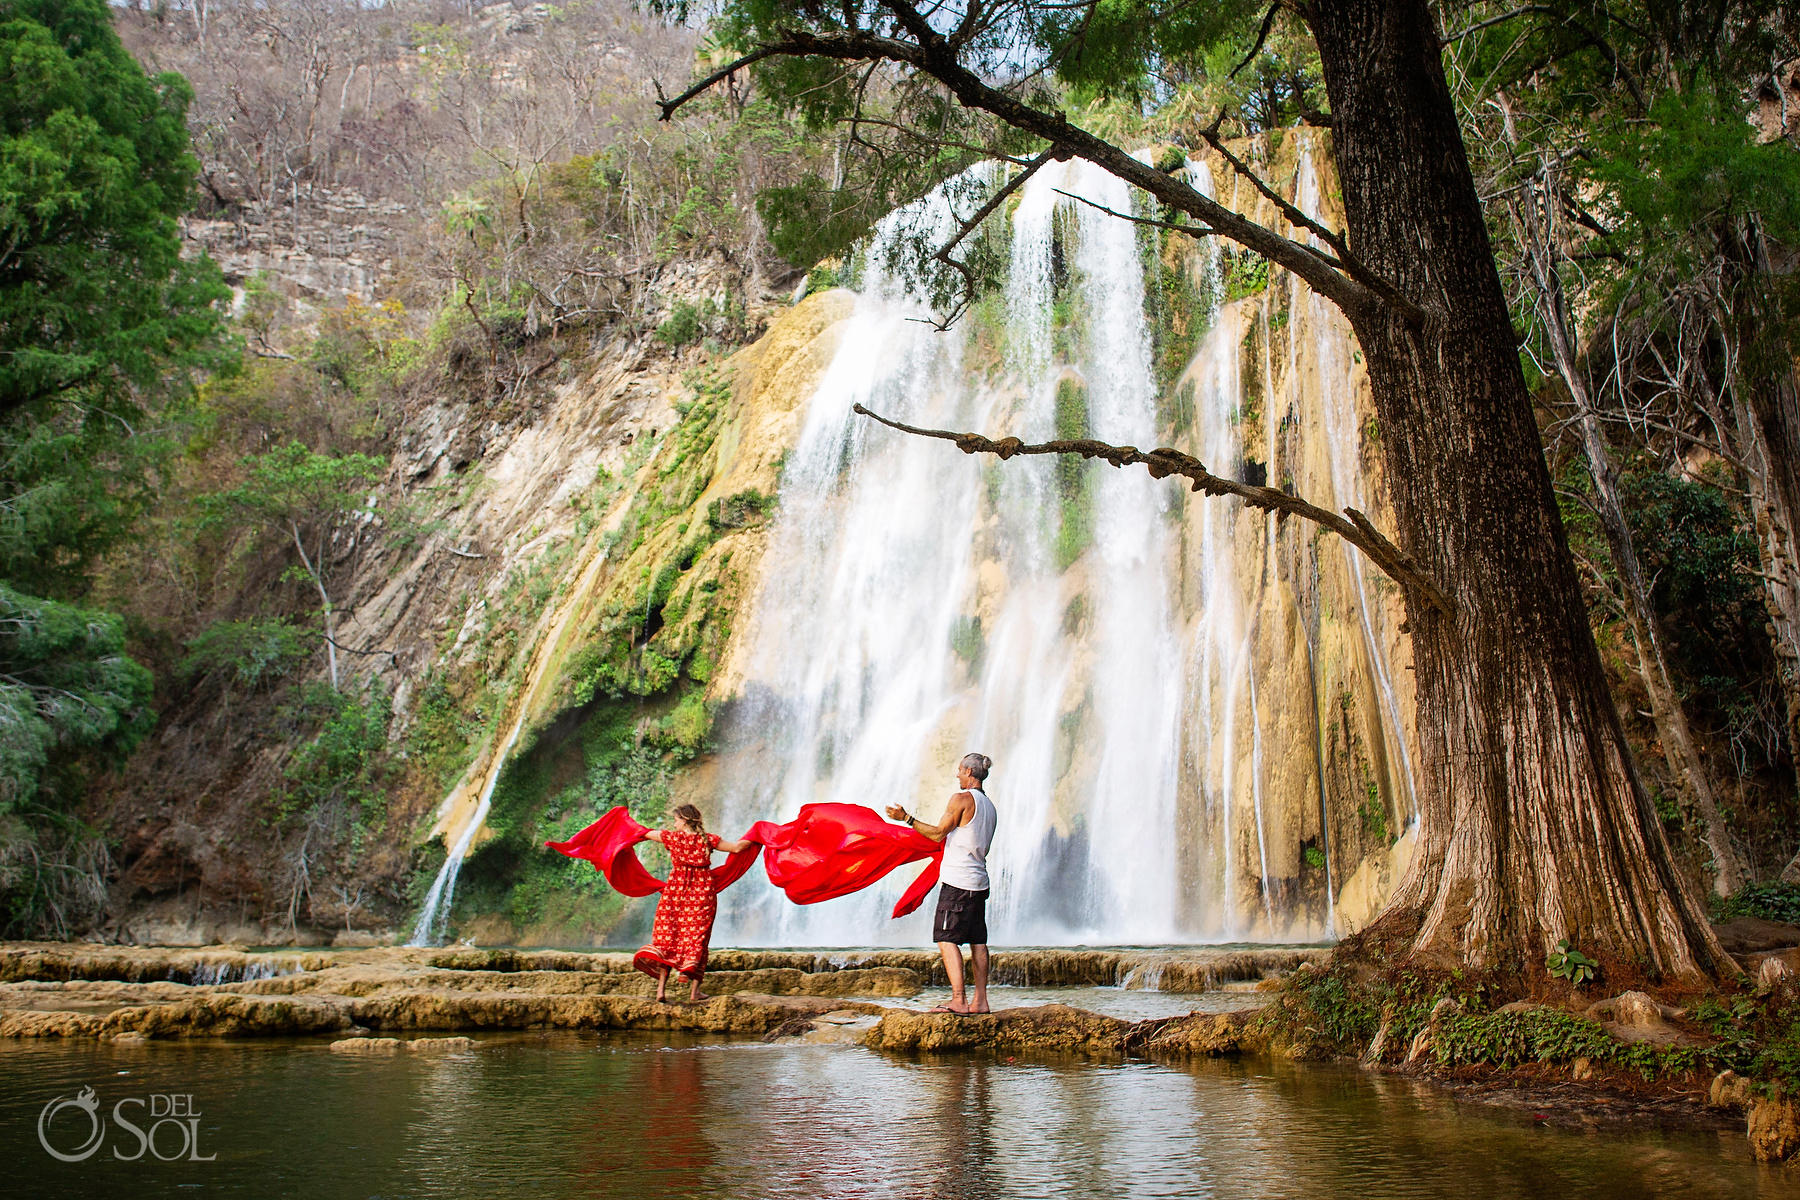 Epic waterfall in Chiapas Mexico